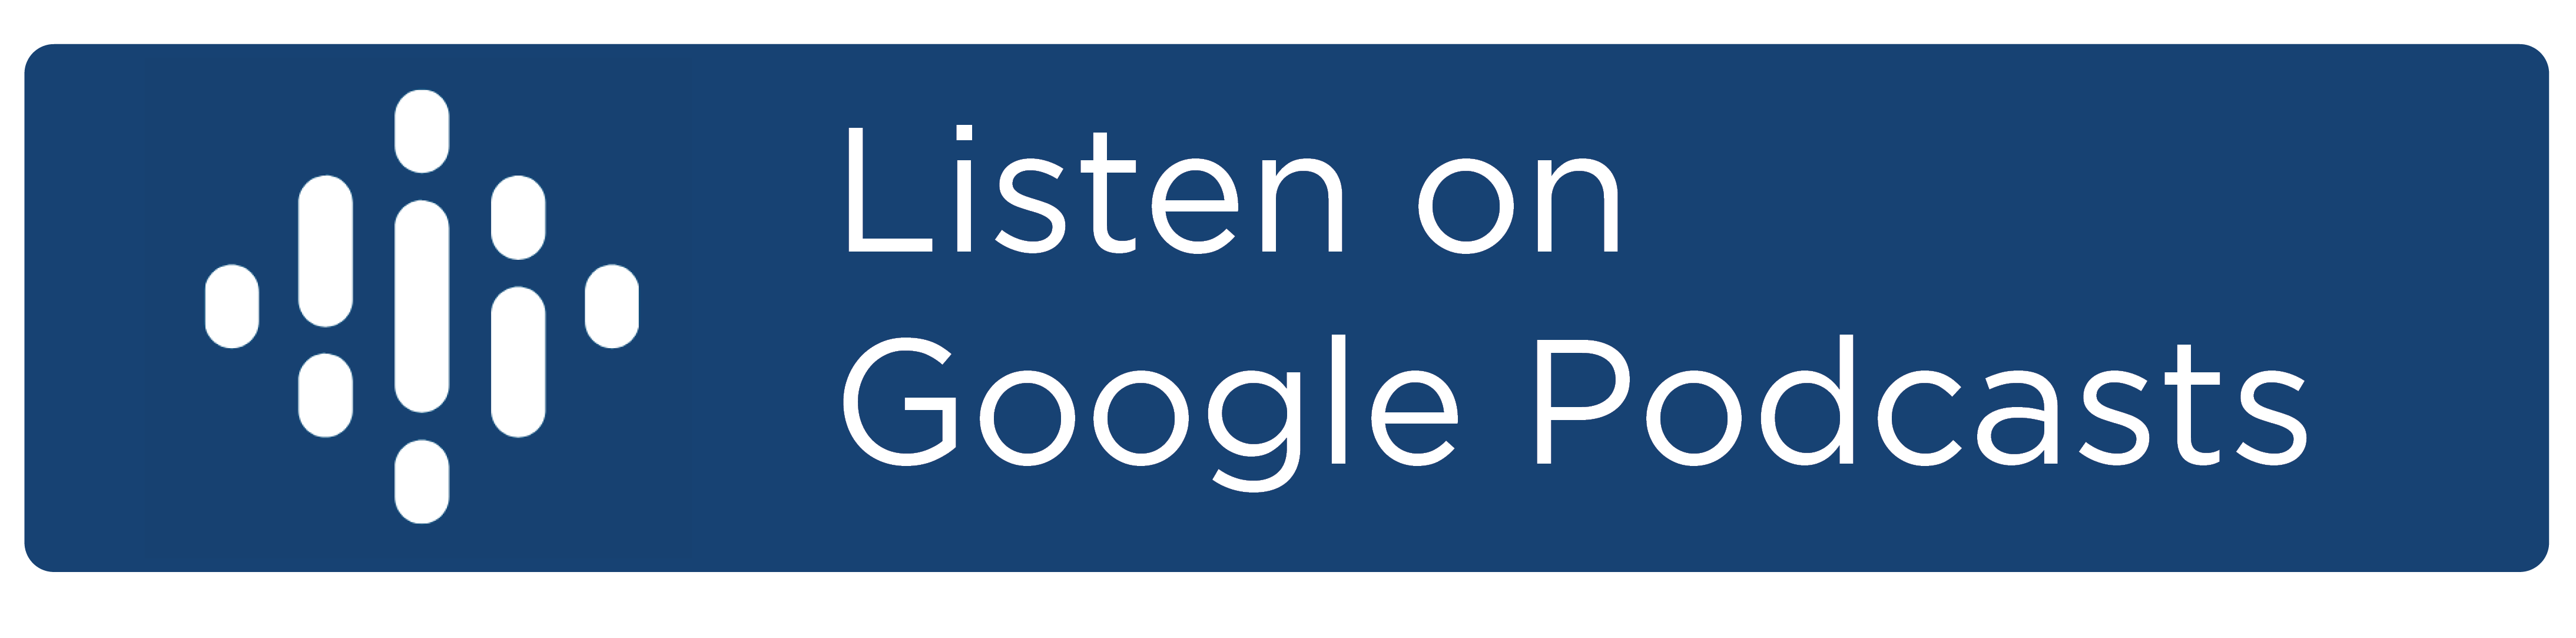 Listen on google podcasts